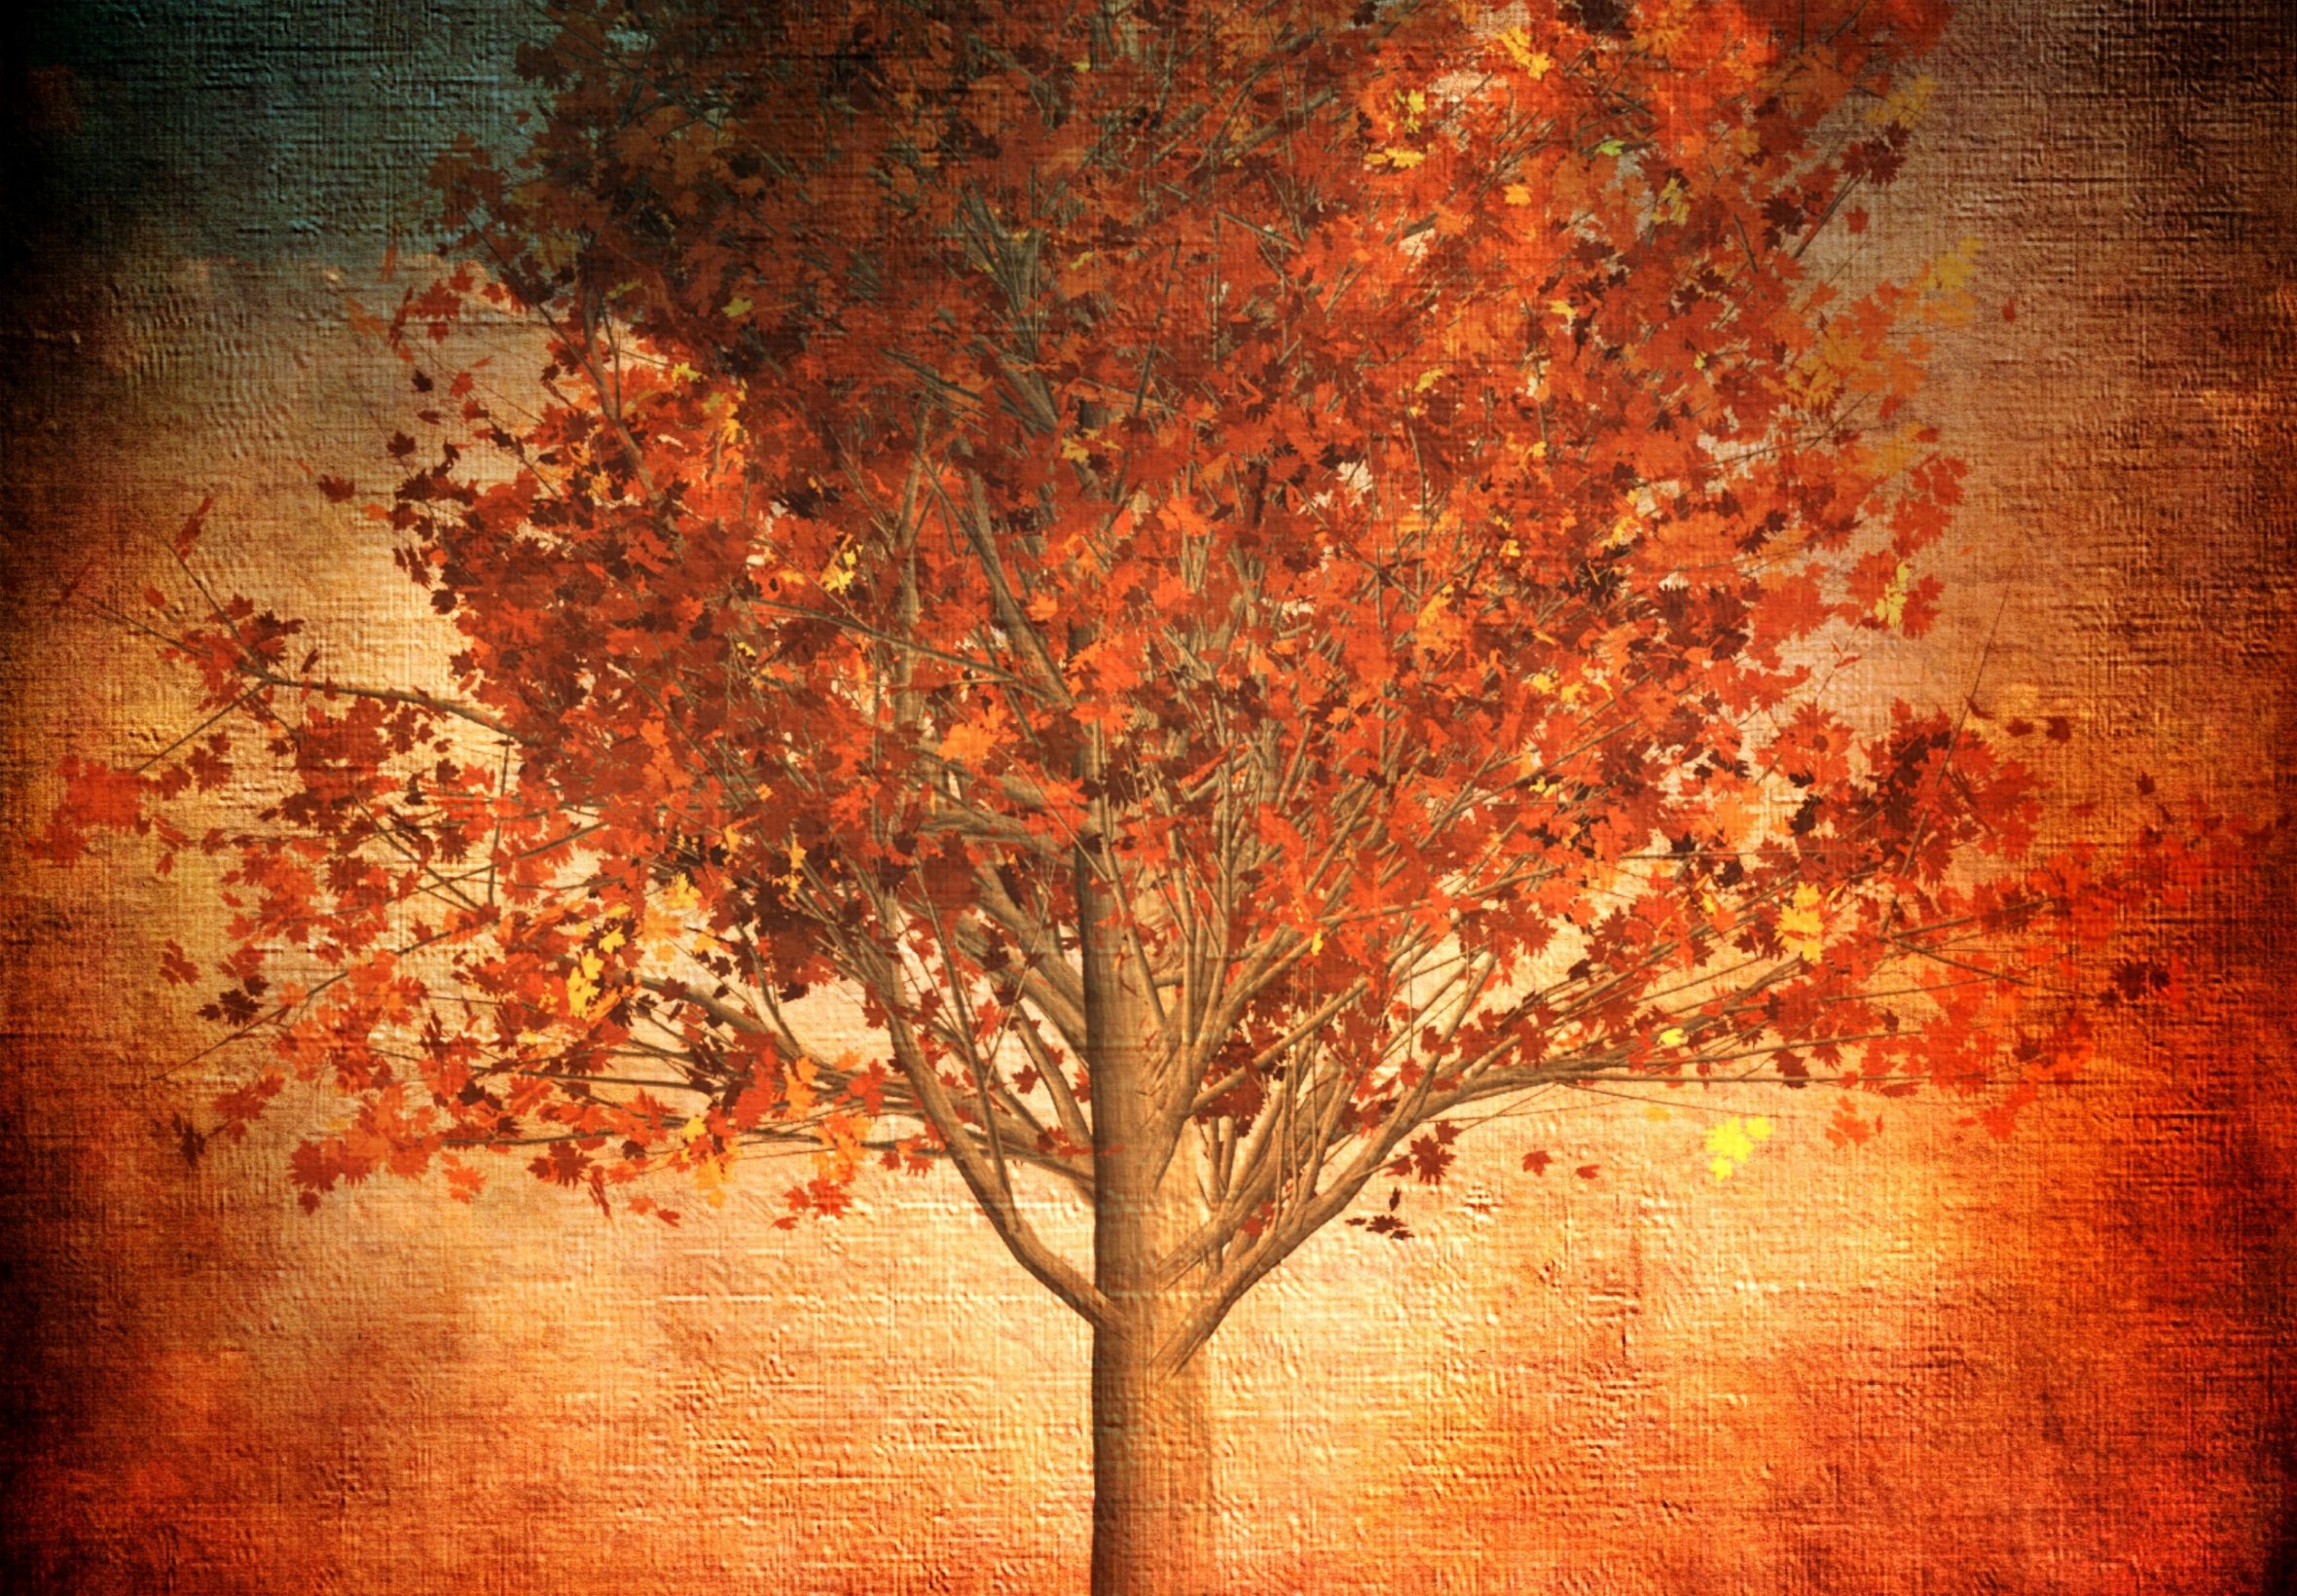 2360x1640 iPad Air wallpaper 4k Aesthetic Autumn Red Fall Leaves Nature iPad Wallpaper 2360x1640 pixels resolution